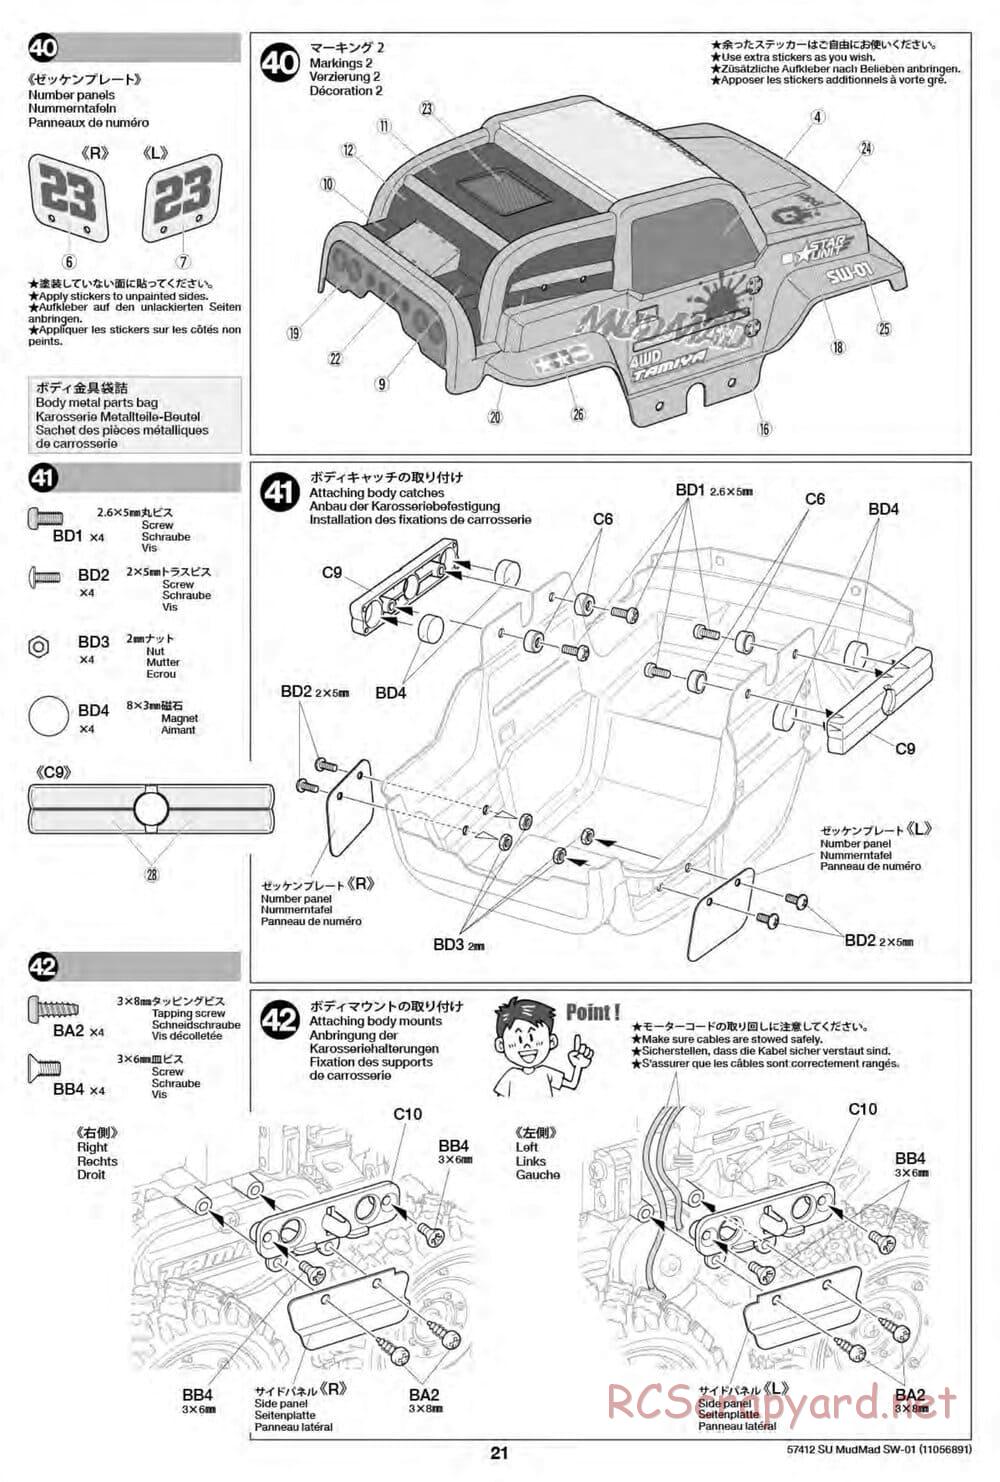 Tamiya - MudMad - SW-01 Chassis - Manual - Page 21